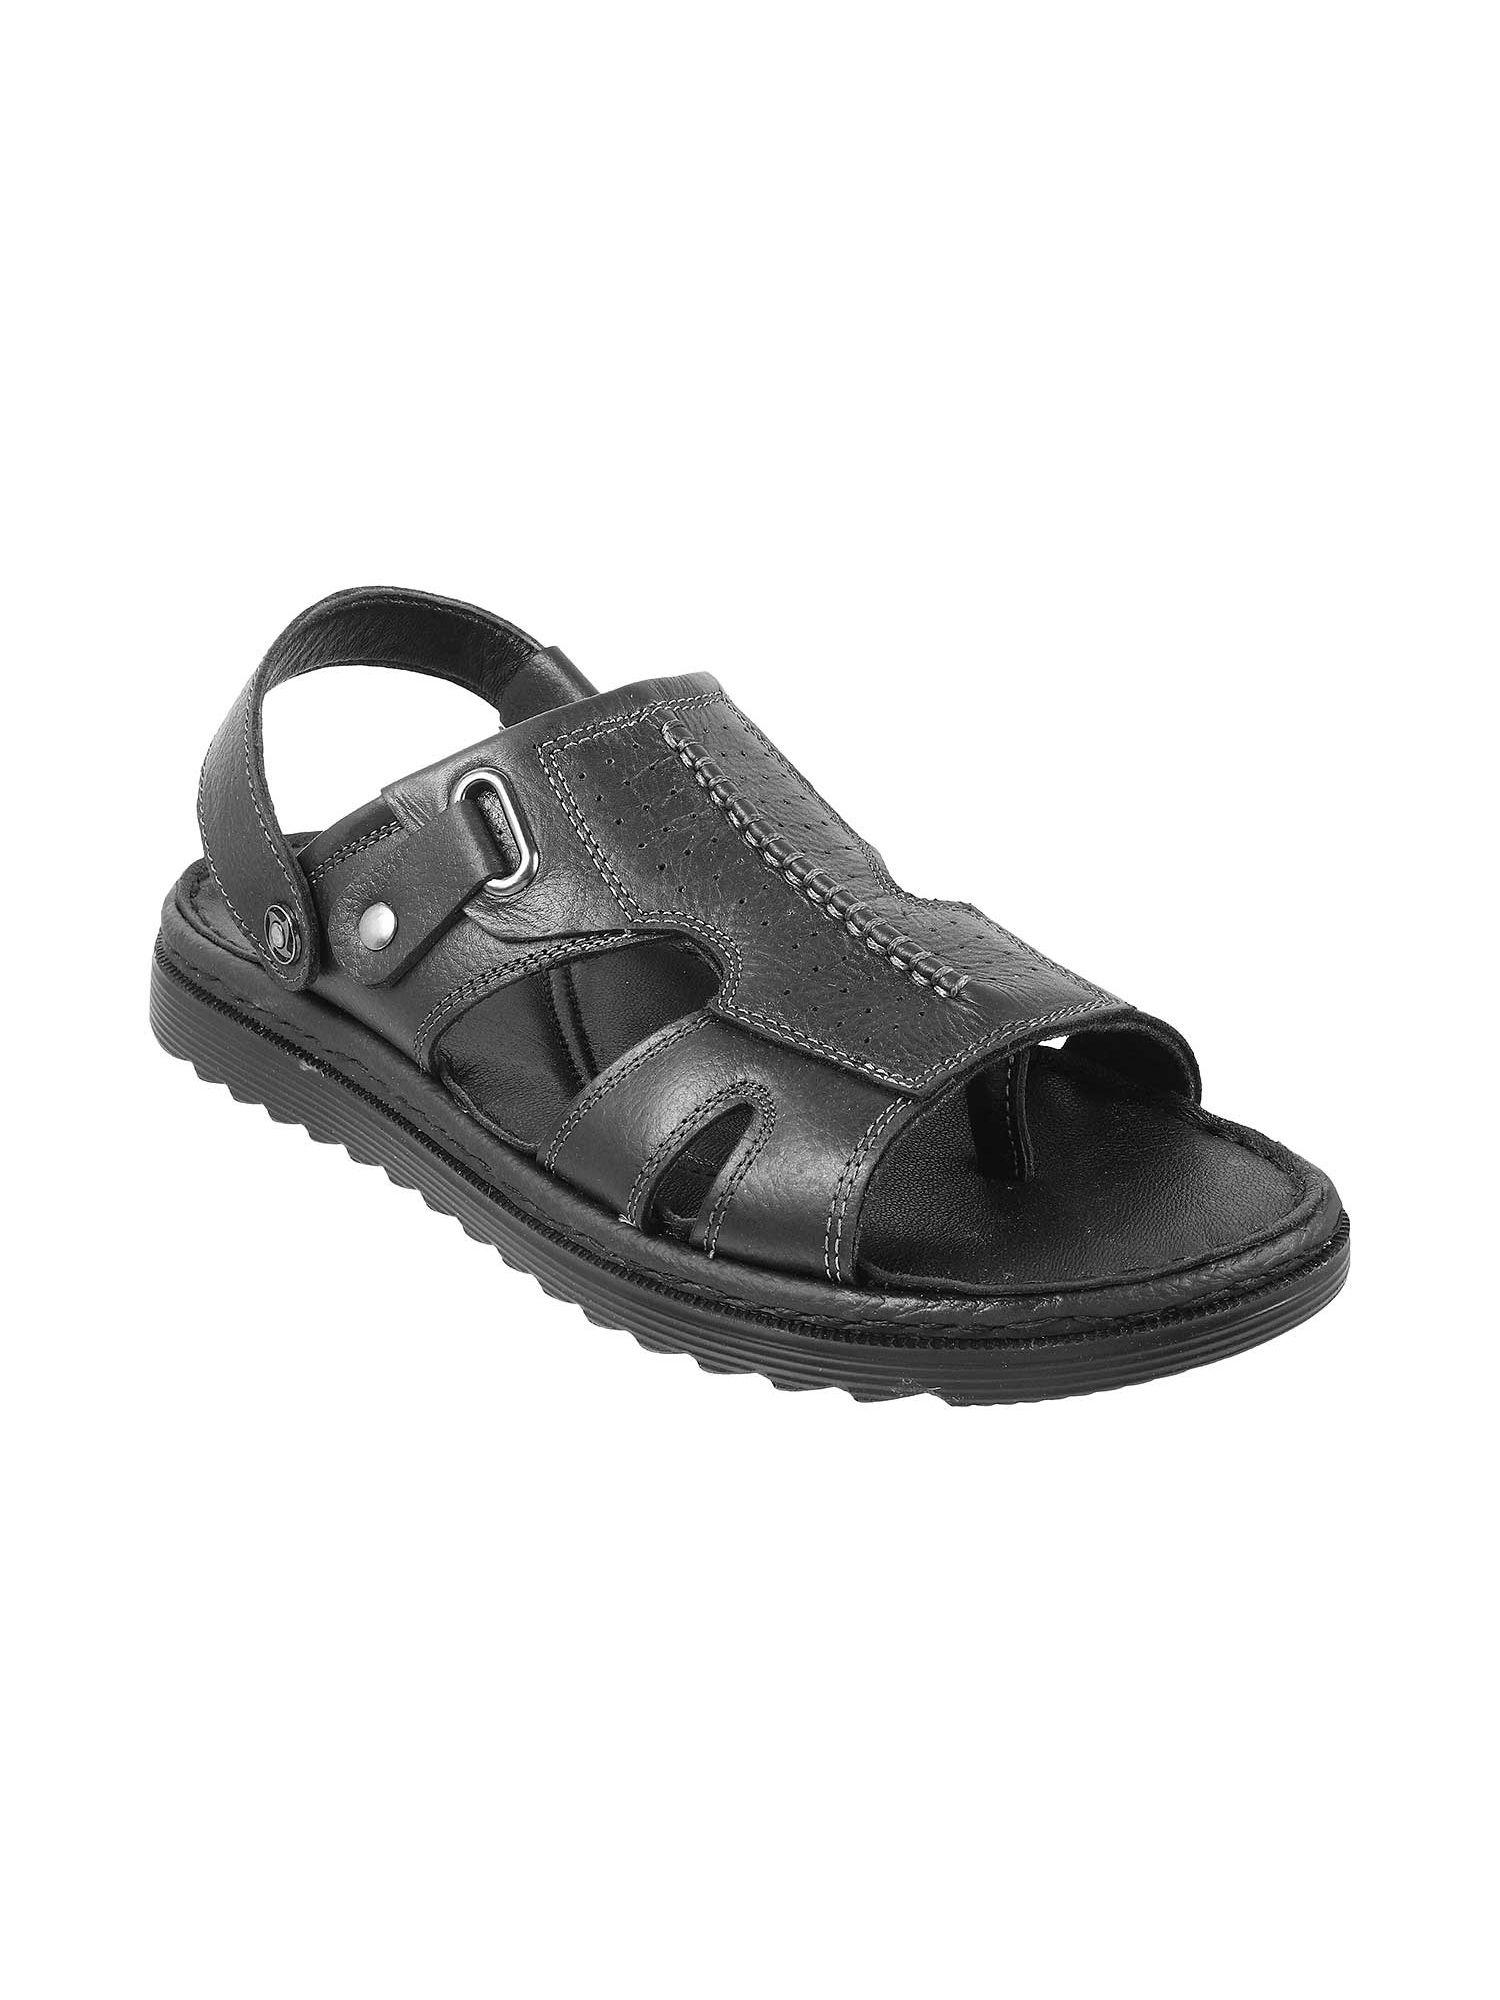 Men Synthetic Black Sandals